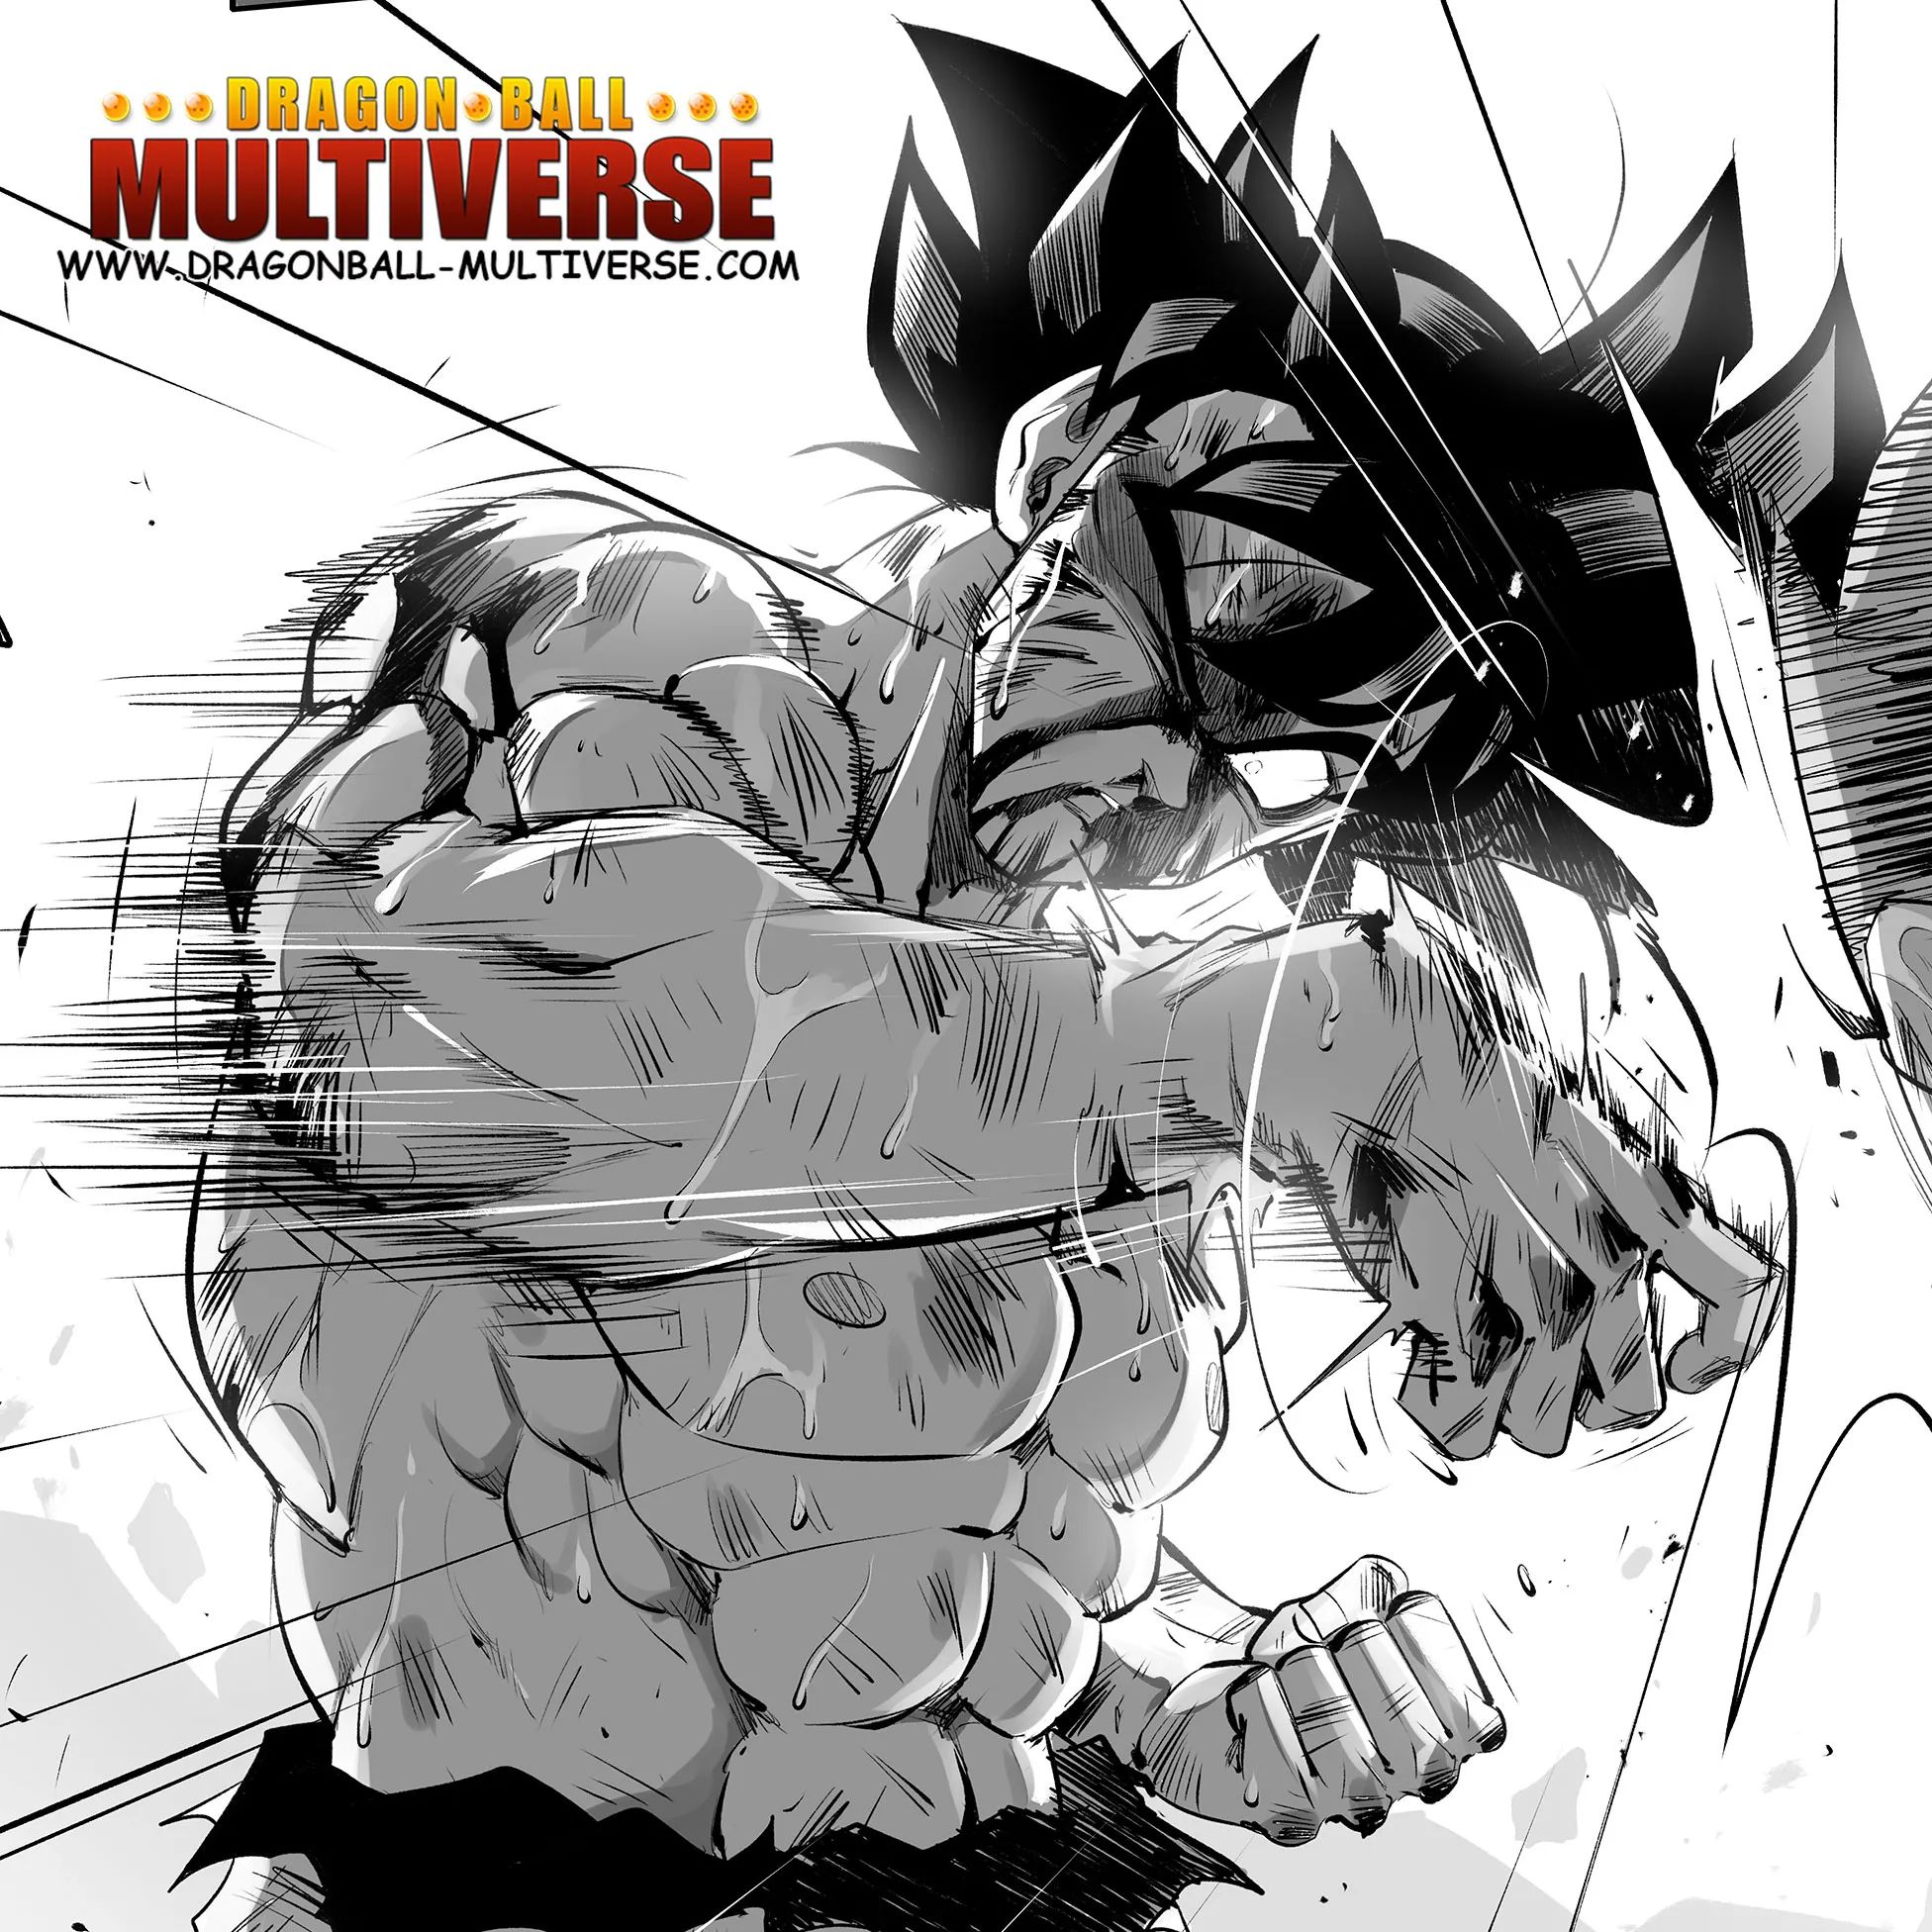 Dragon Ball Multiverse on X: ☆ NEW DBM PAGE